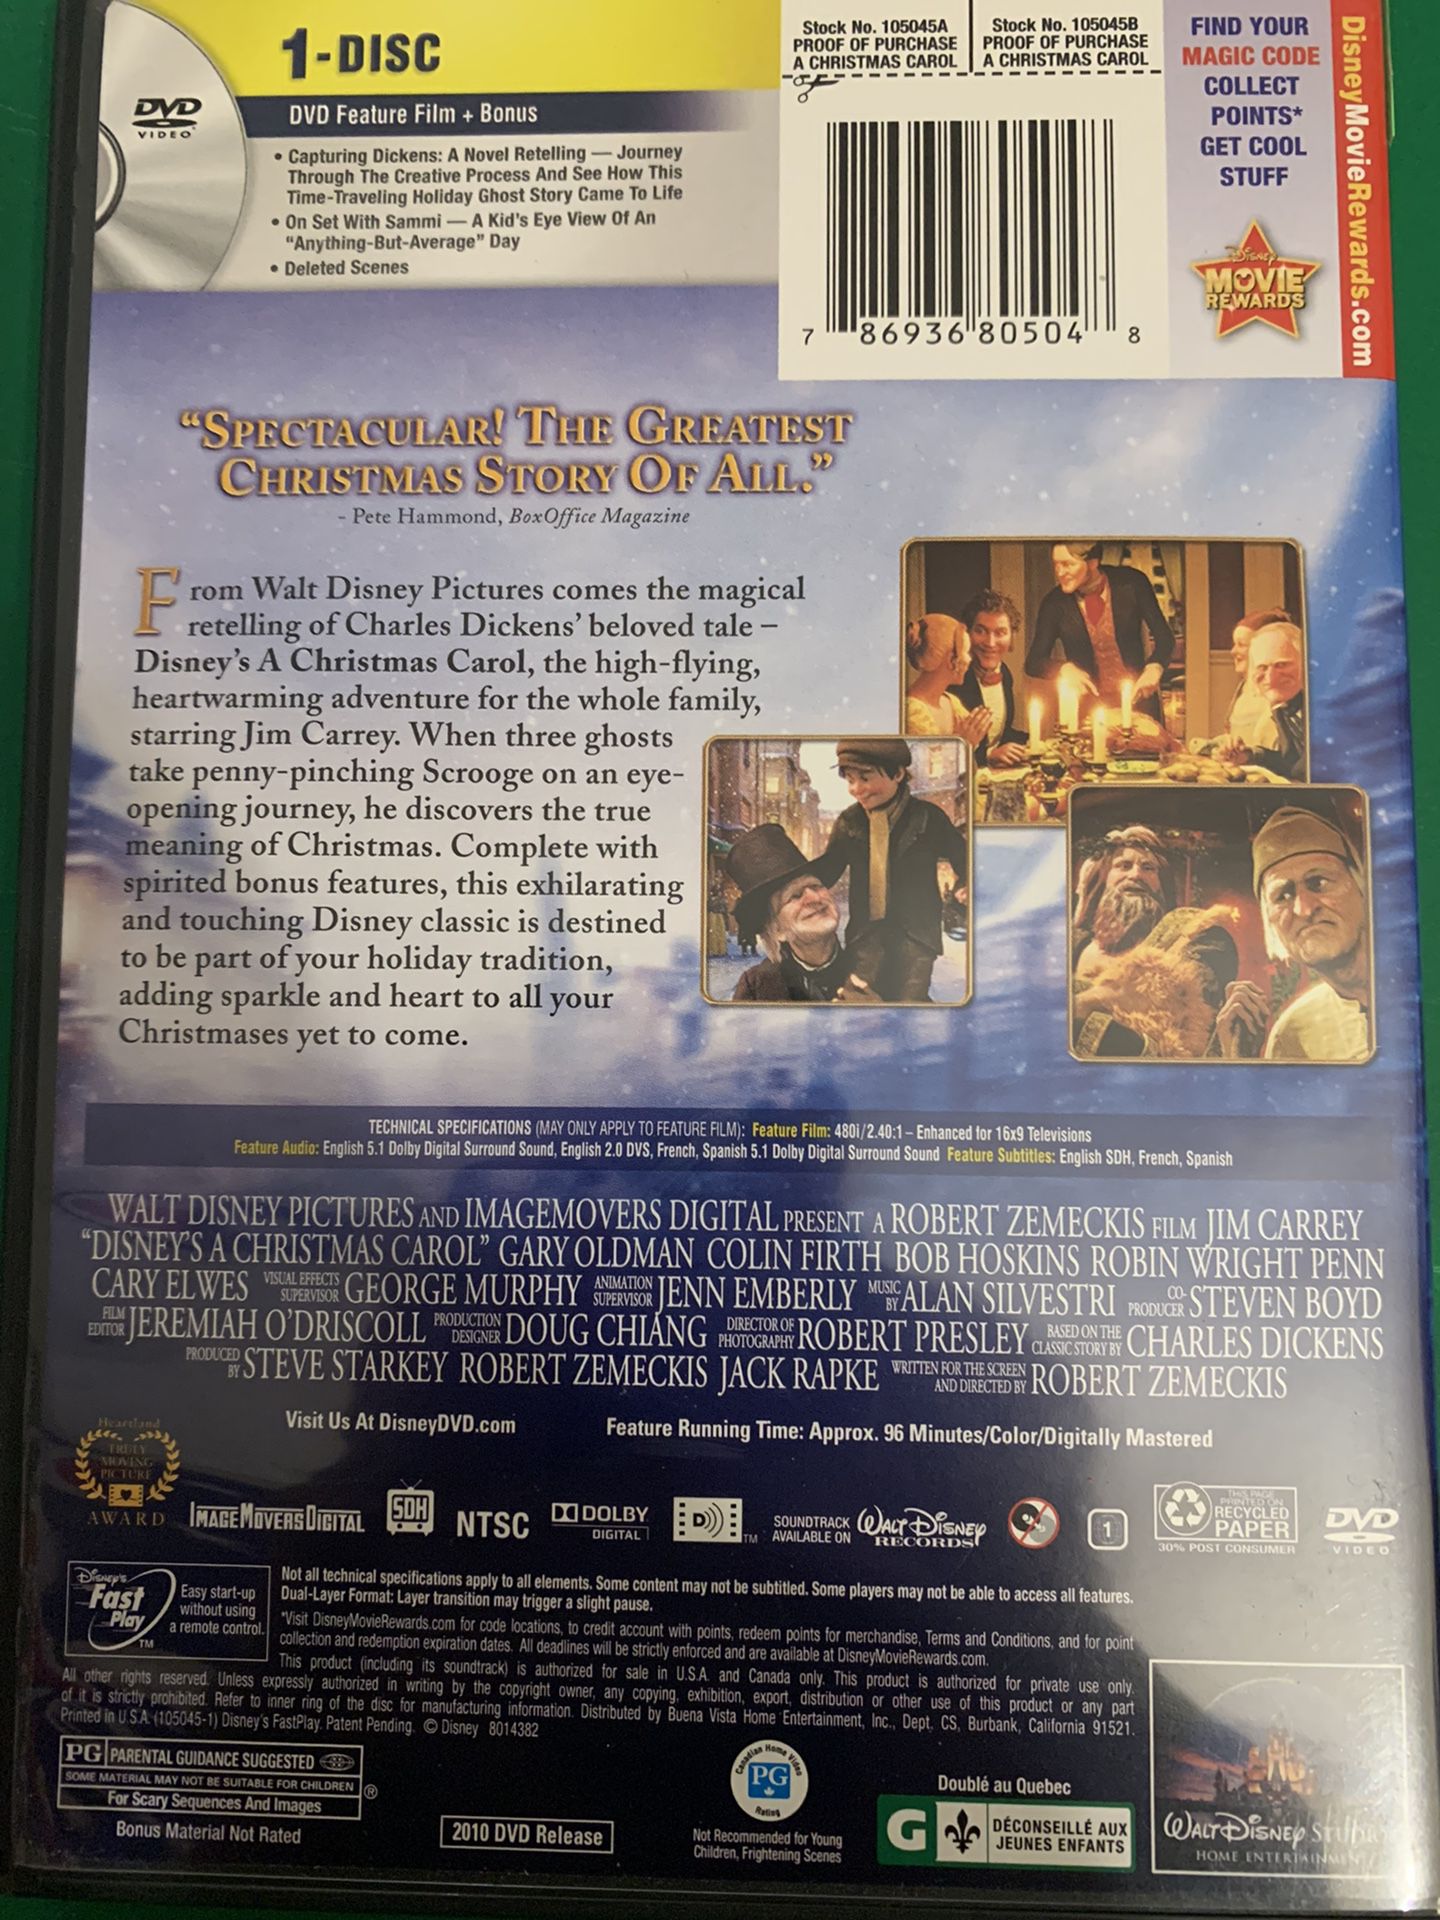 Disney Jim Carrey: Christmas Carol [DVD]